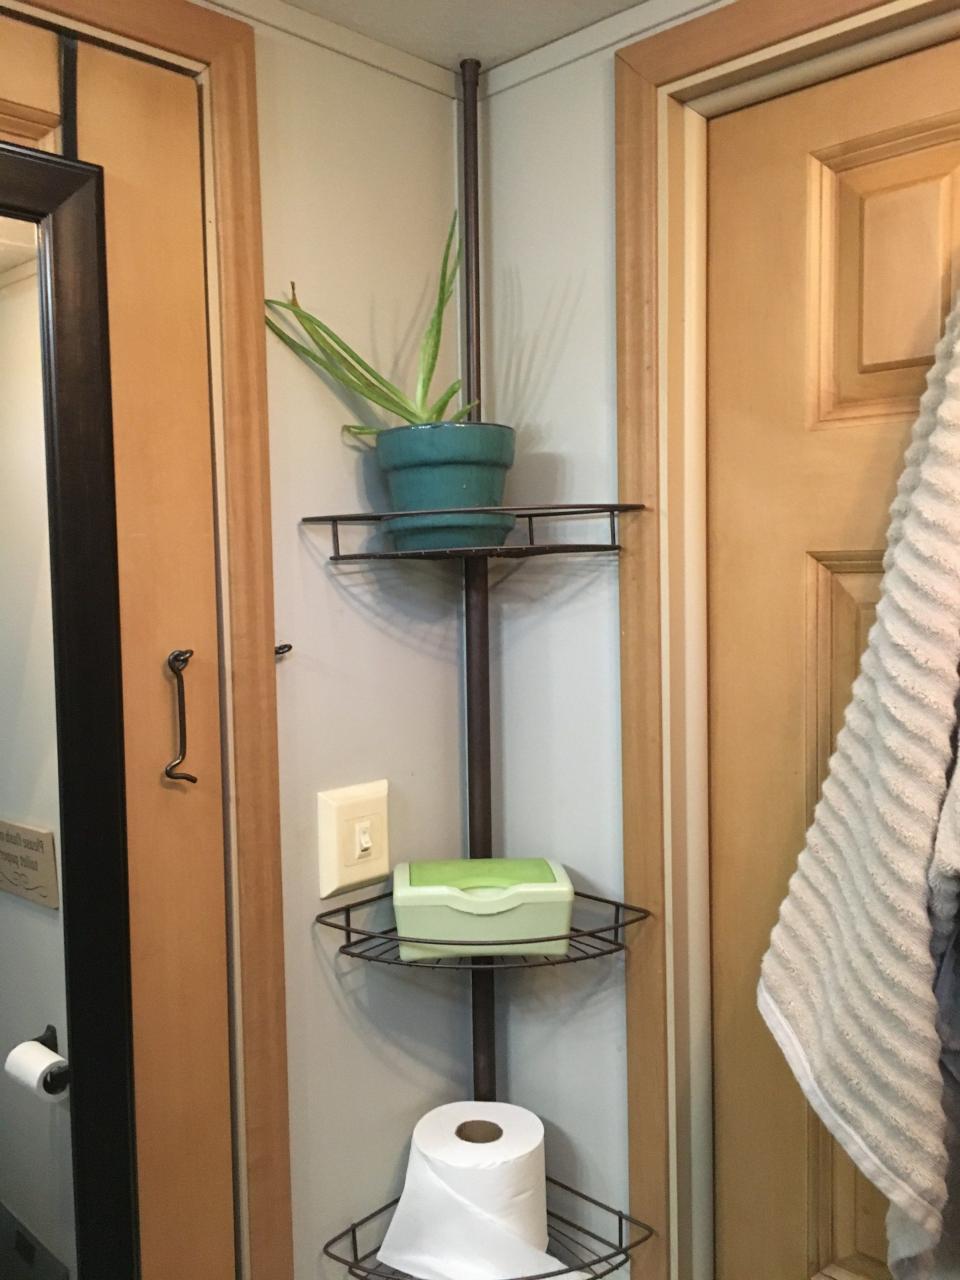 Shower shelf extra storage idea for bathroom organization in campers